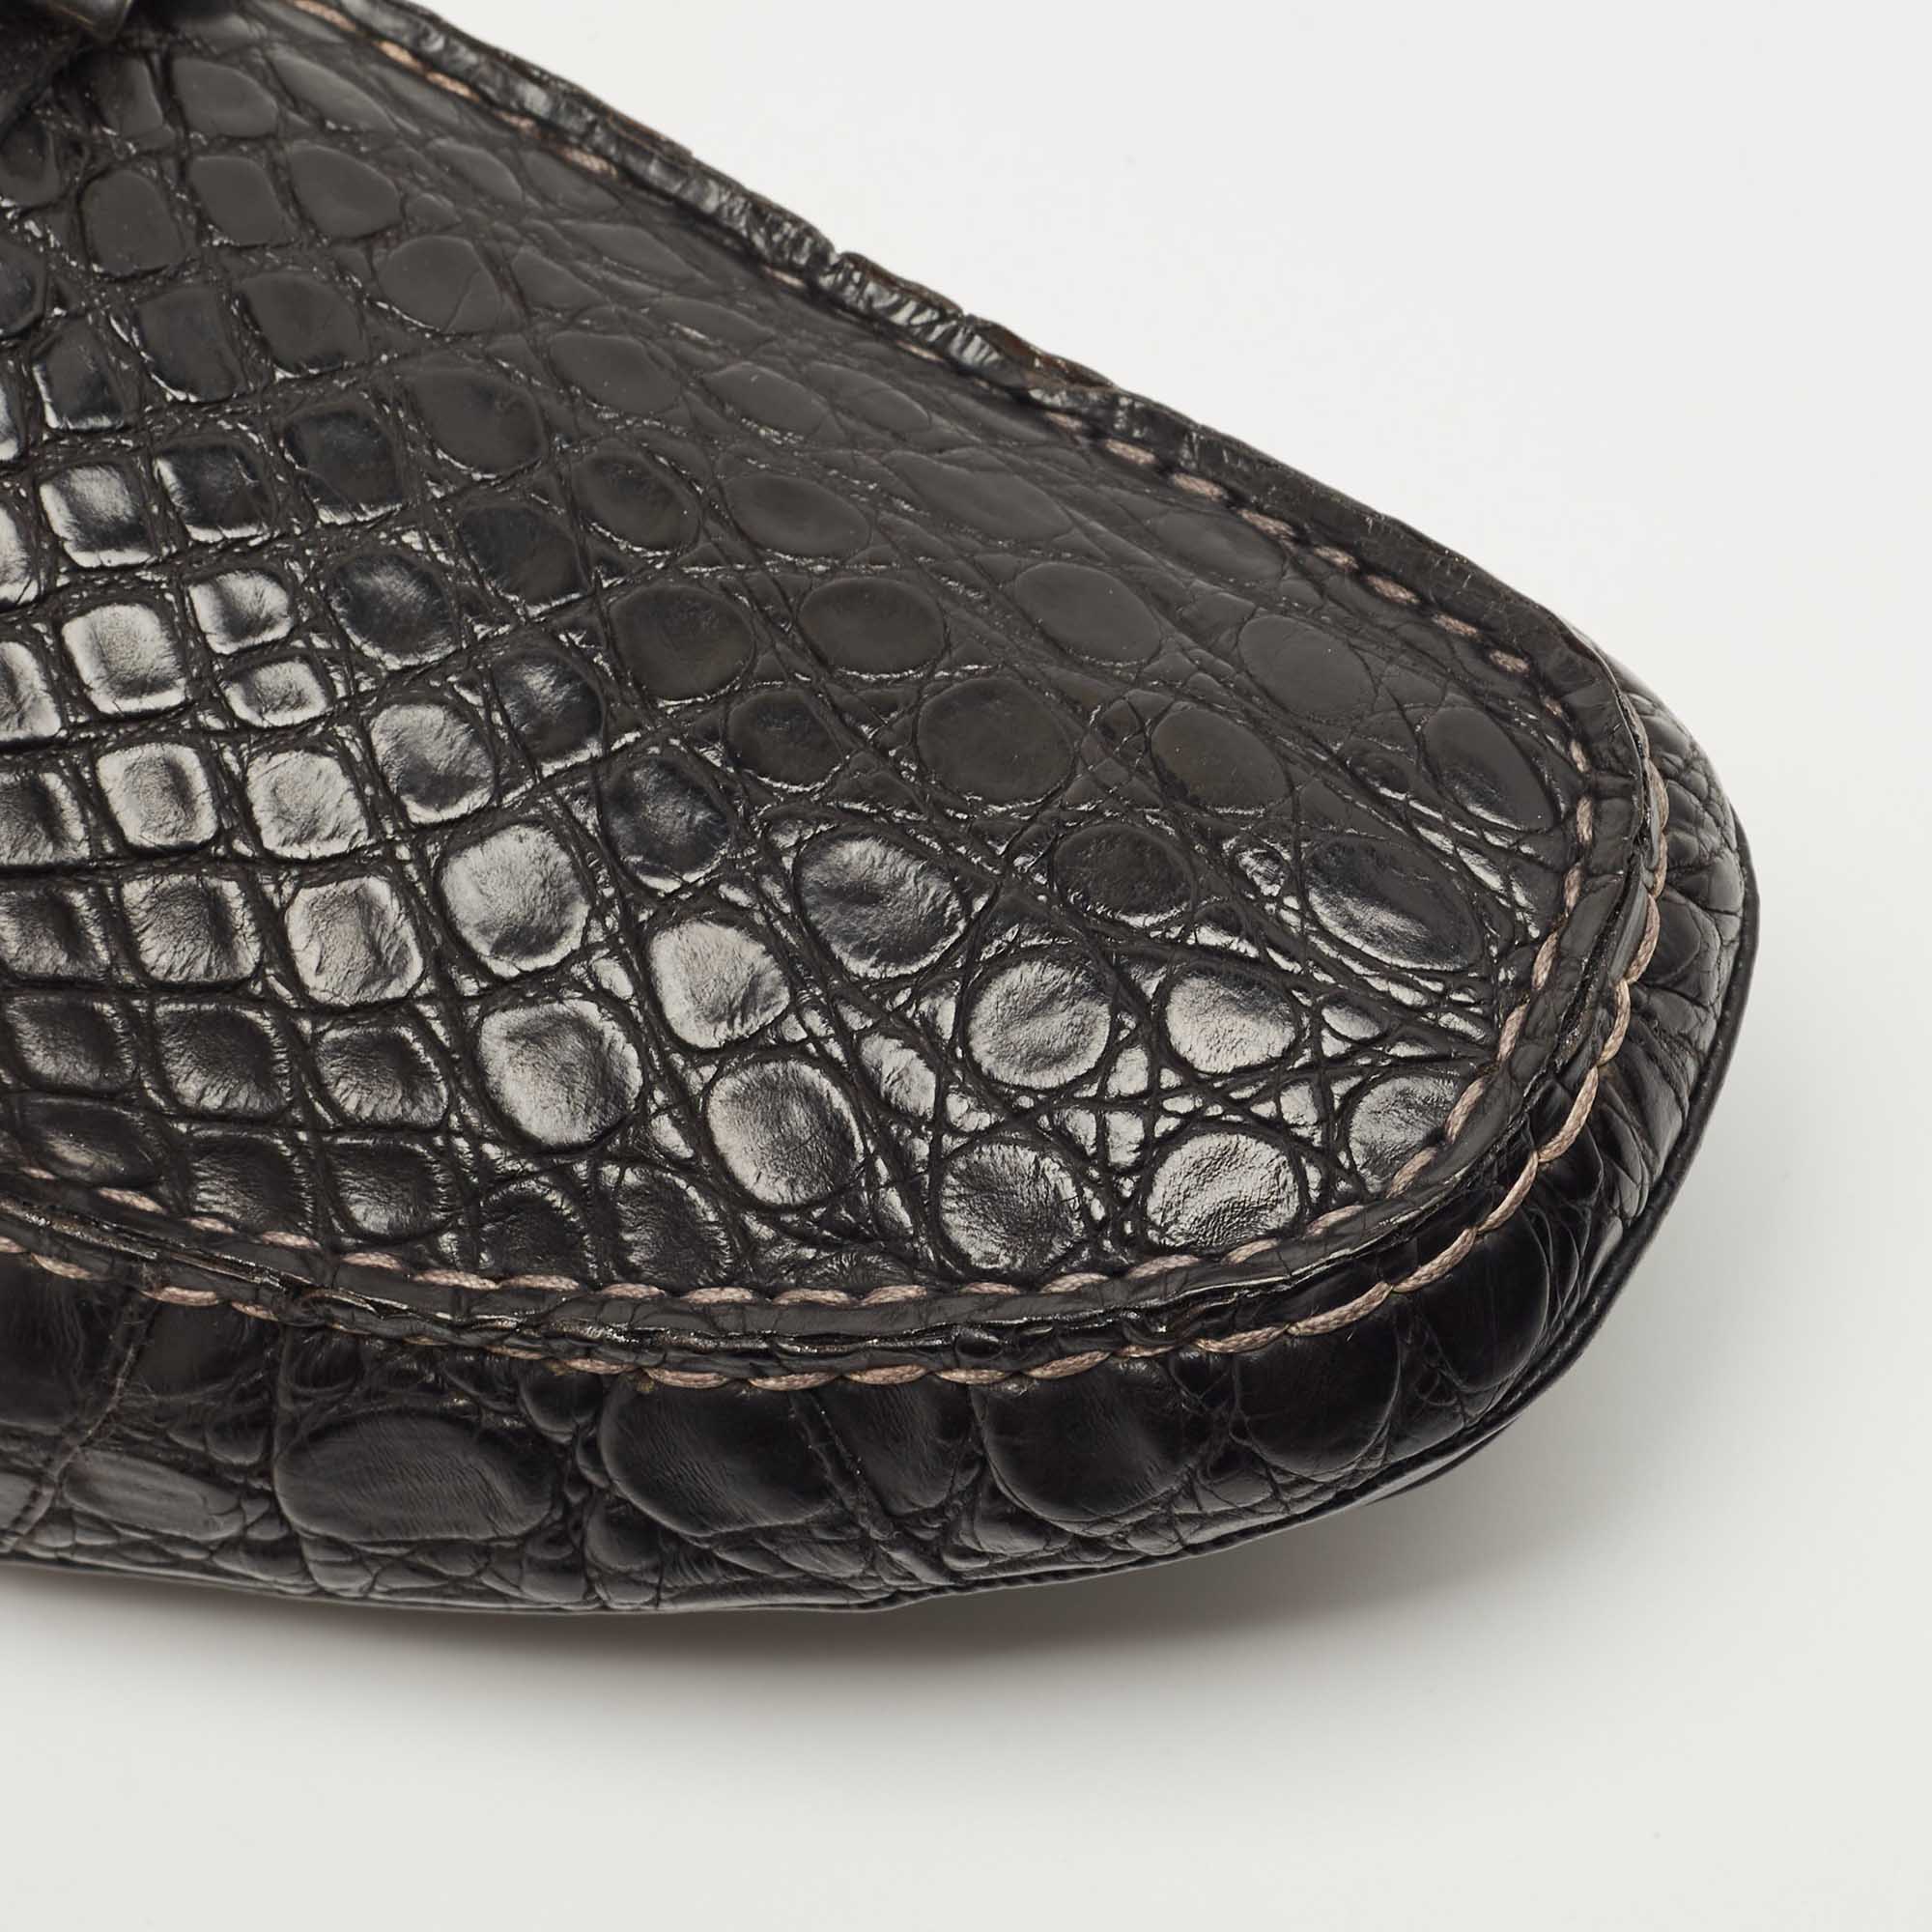 Salvatore Ferragamo Black Croc Leather Parigi Horsebit Slip On Loafers Size 44.5